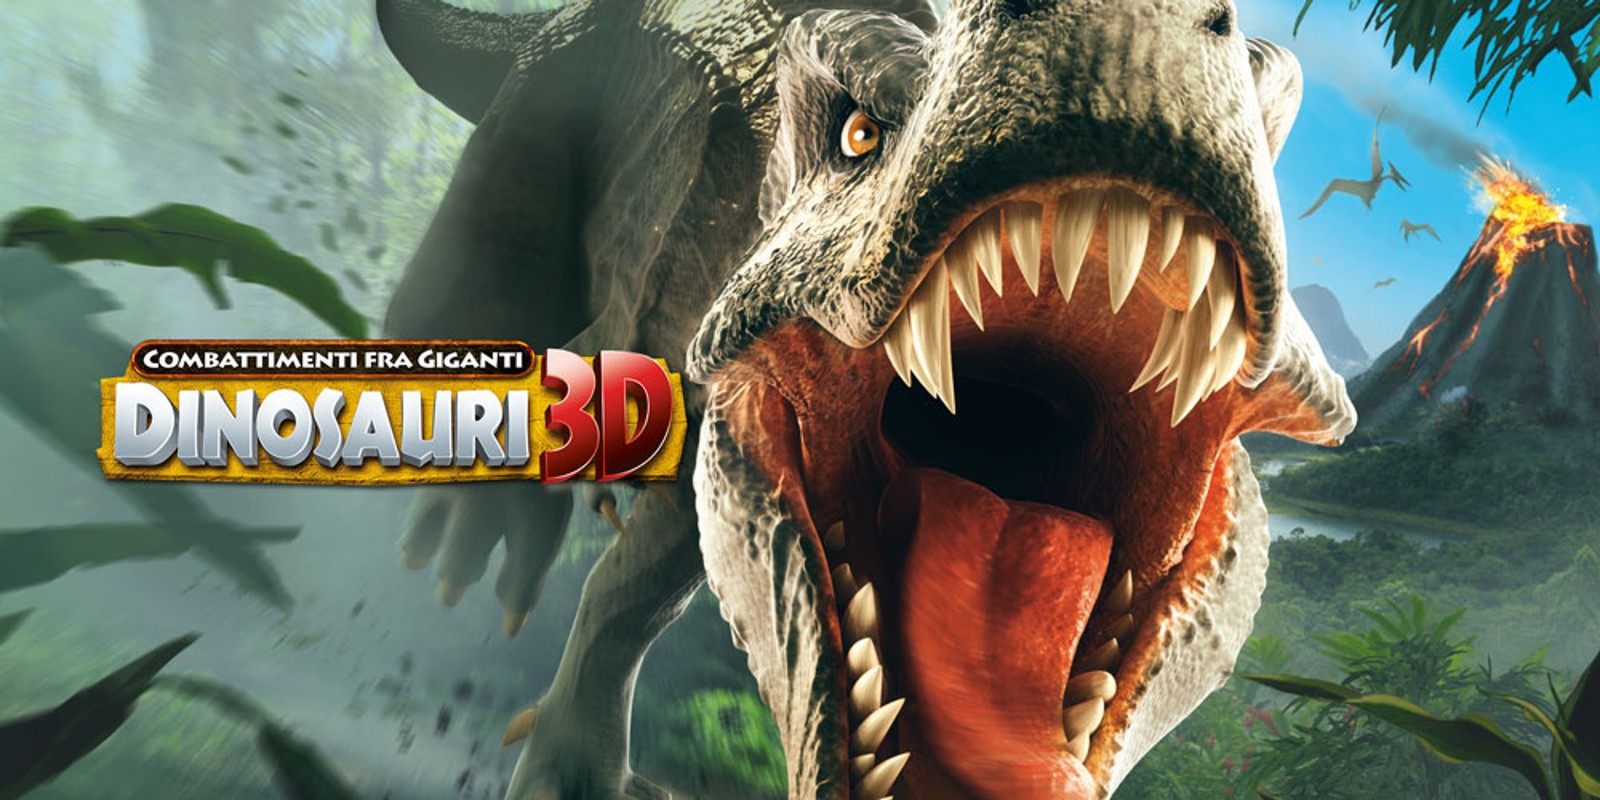 Combattimenti fra Giganti Dinosauri 3D